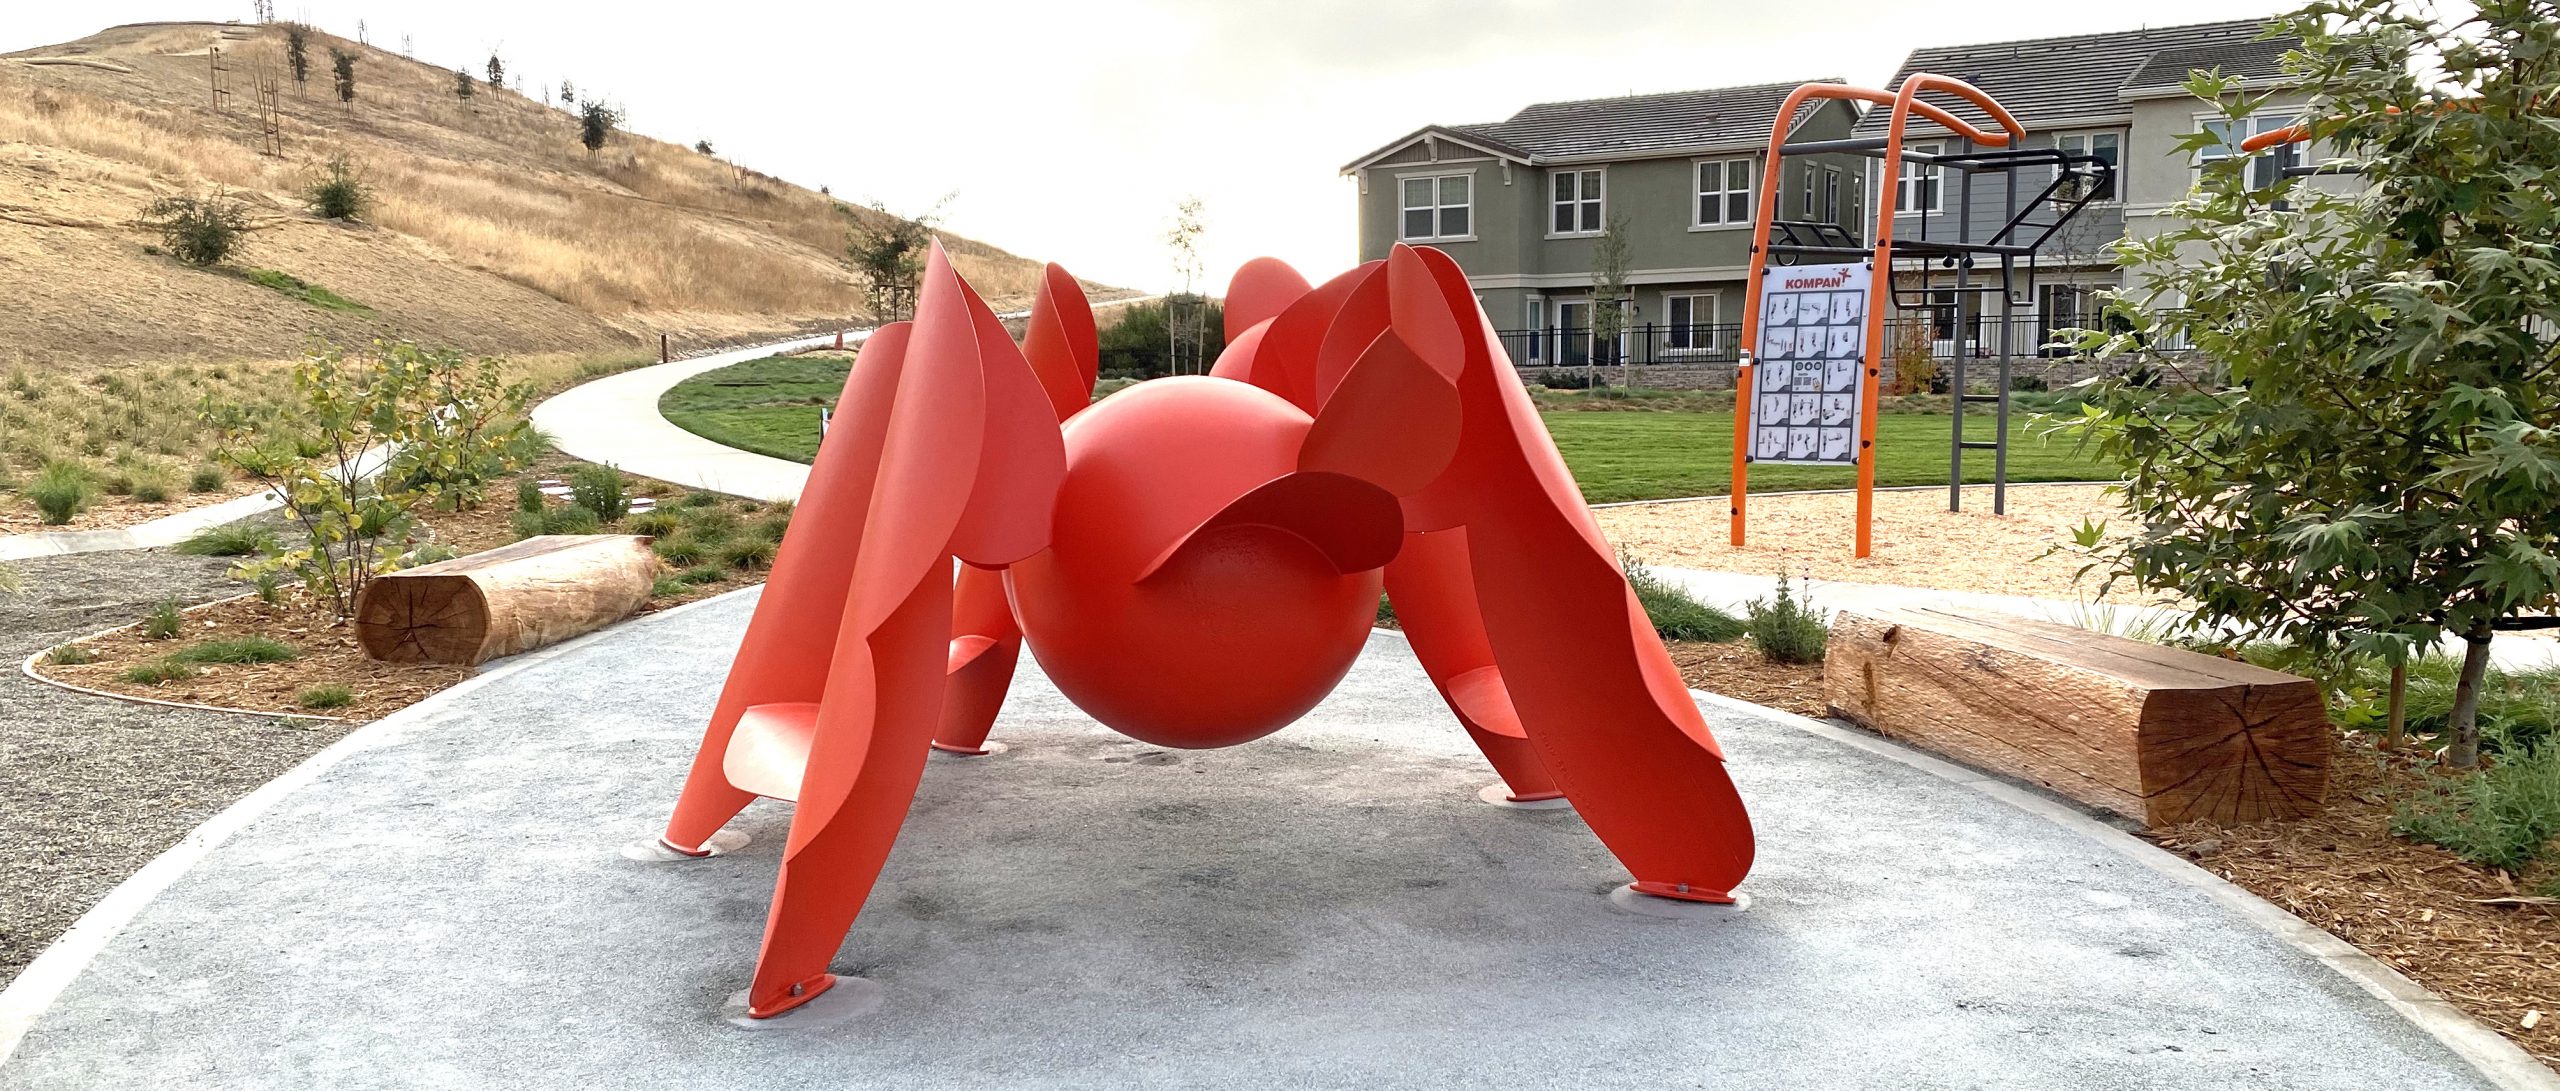 Arachnicat, an eco-friendly biomorphic sculpture & play structure